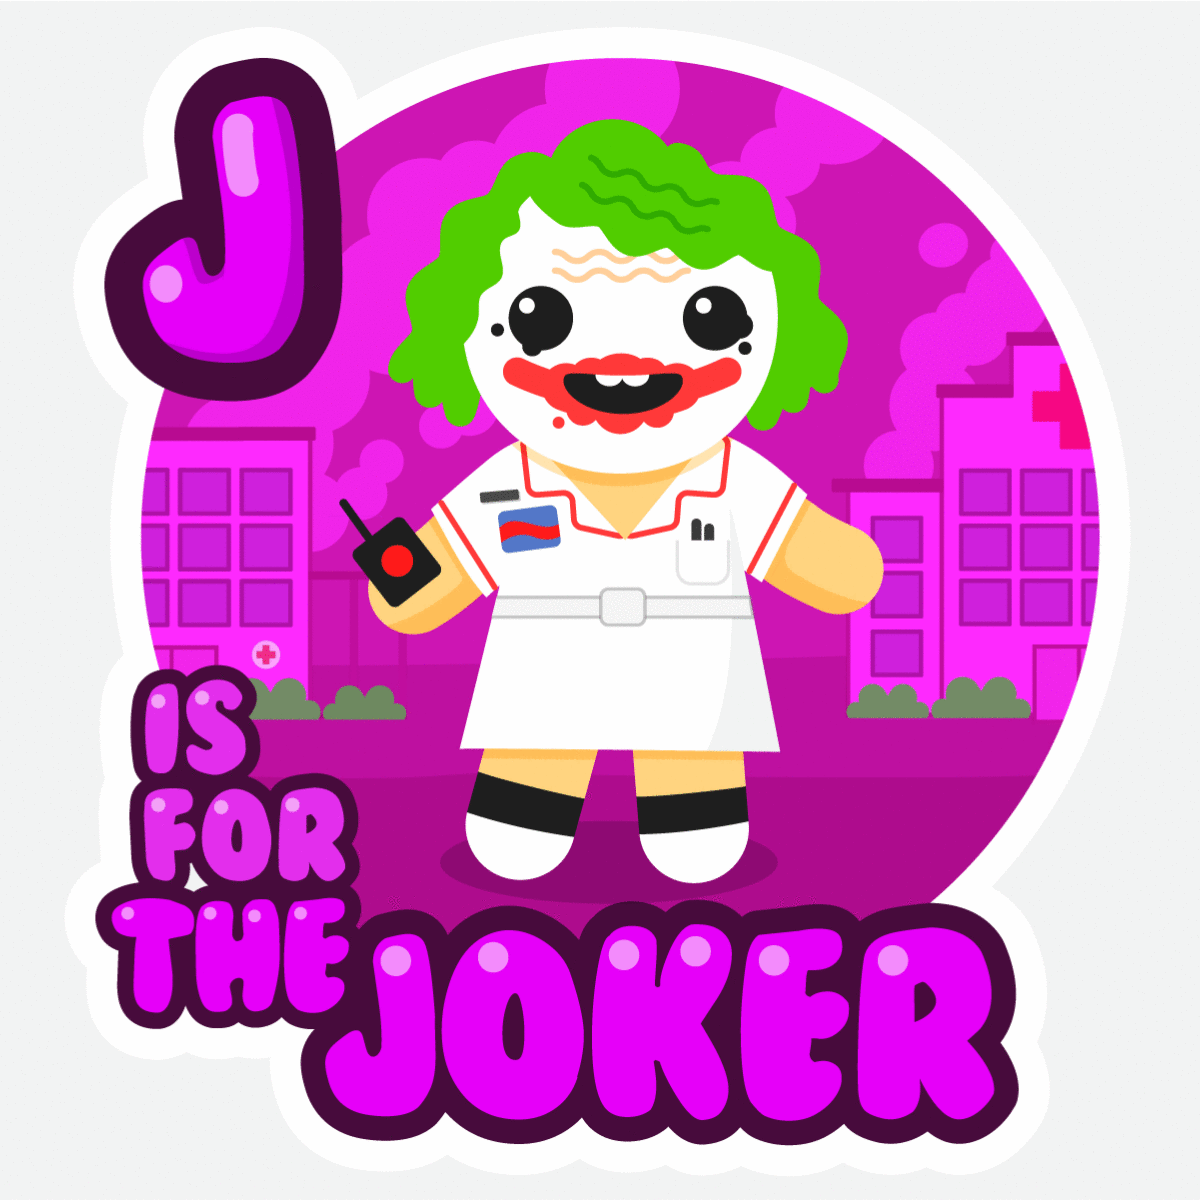 J is for The Joker shirt from ABCs of Evil